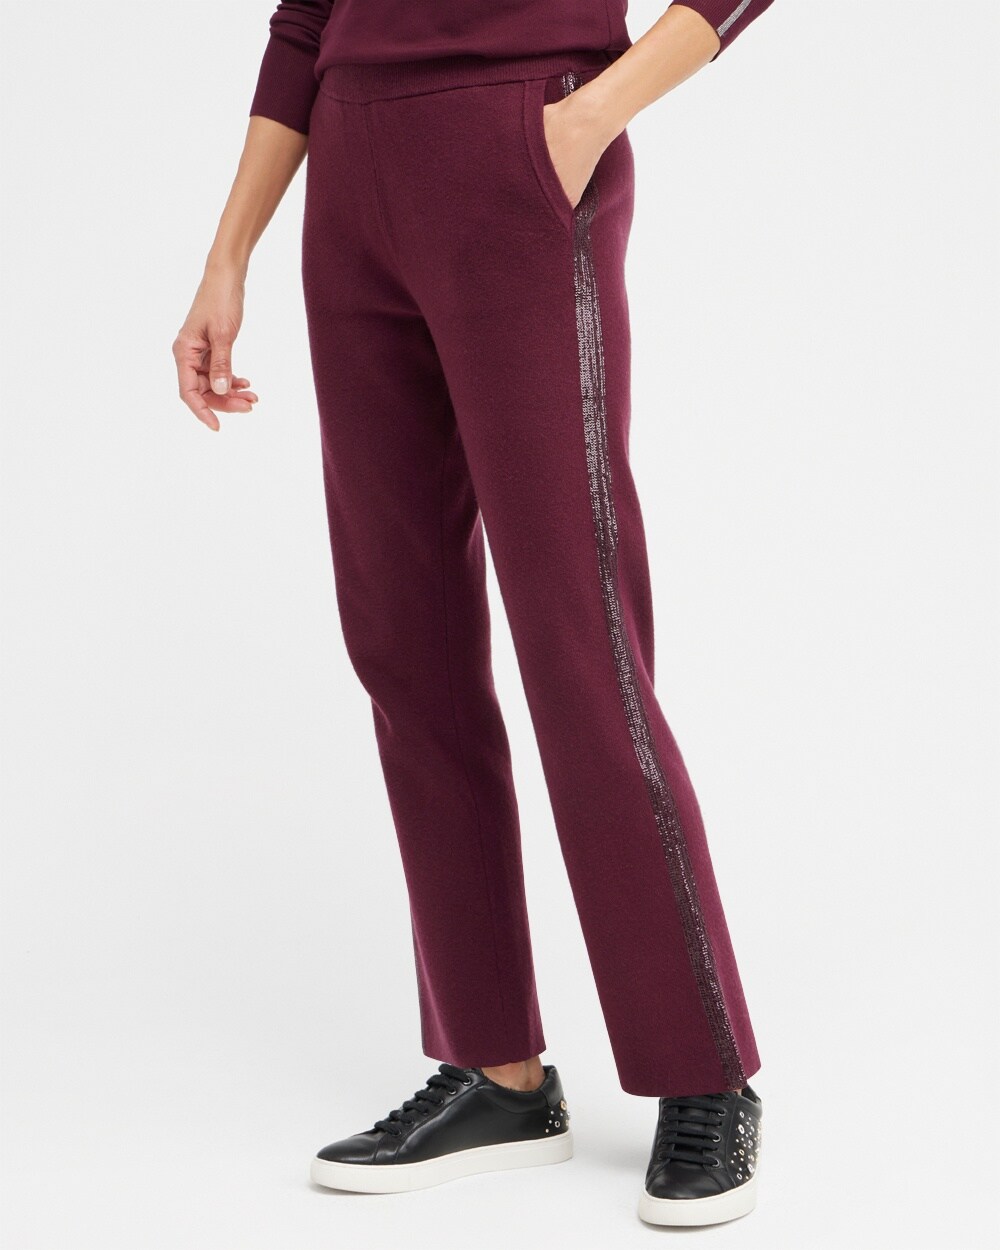 Zenergy Luxe Cashmere Blend Sequin Pants